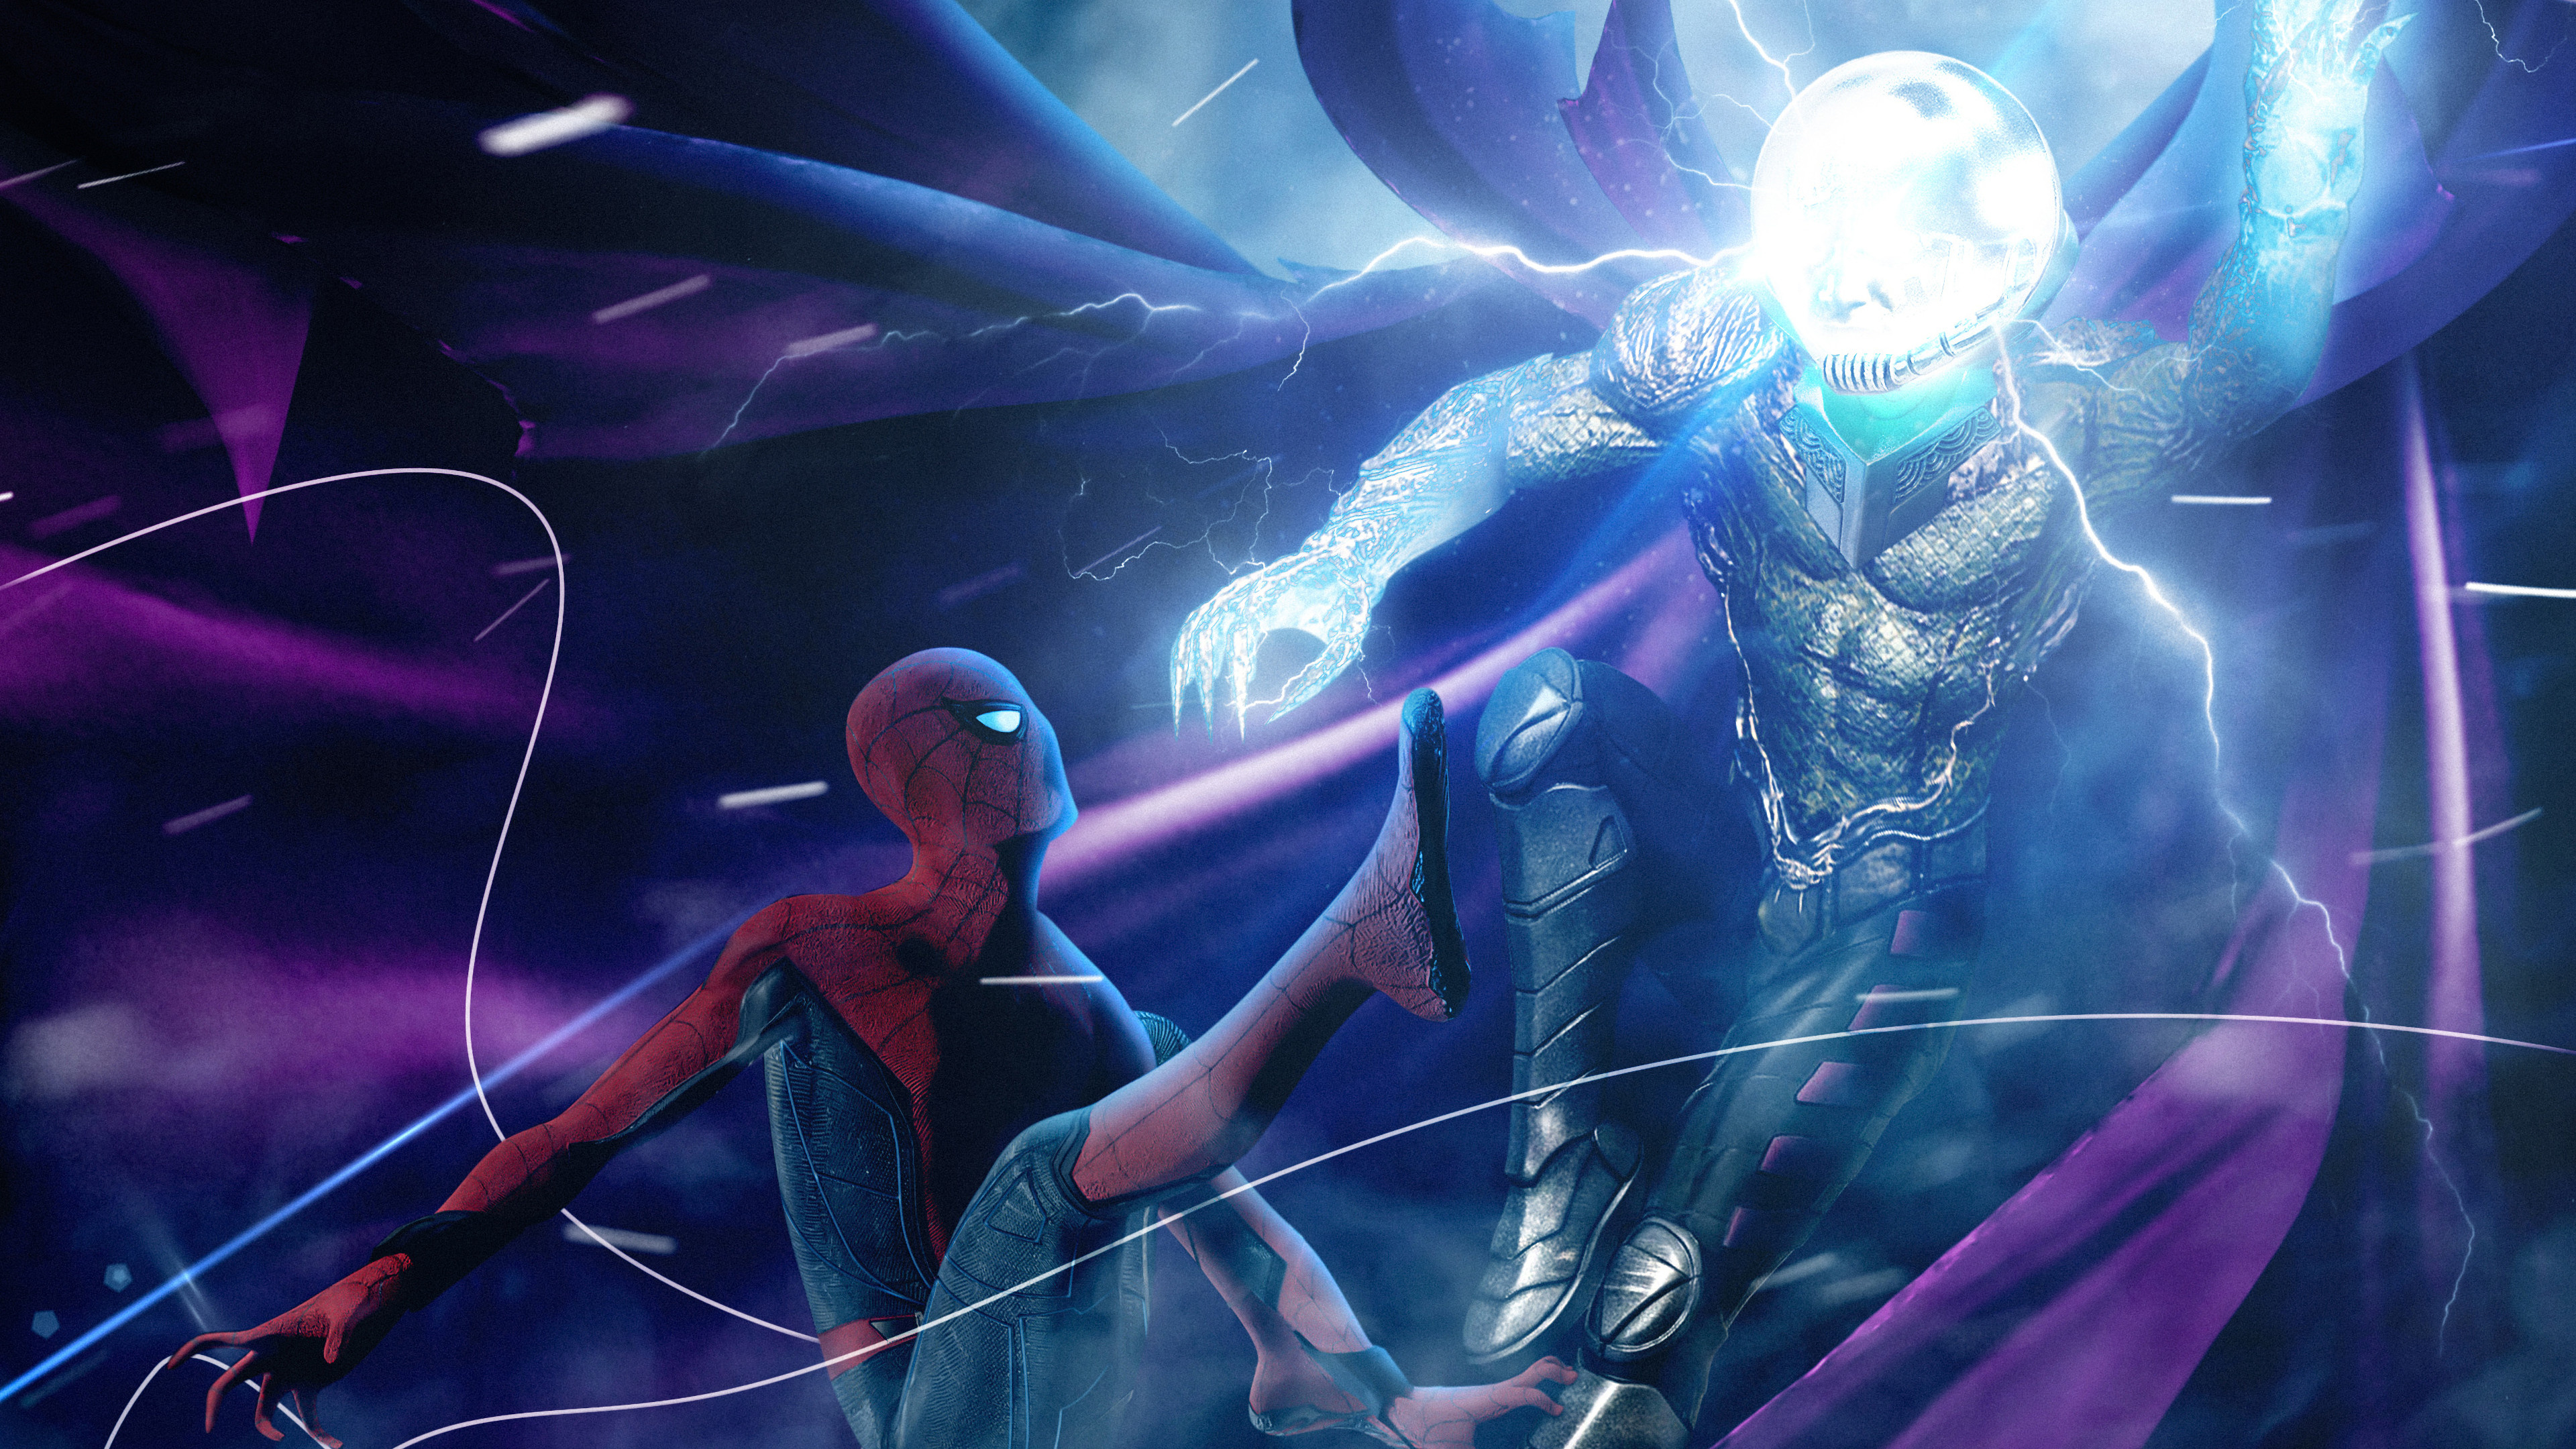 Mysterio and Spider-Man wallpaper, 4K resolution, 3840x2160 4K Desktop